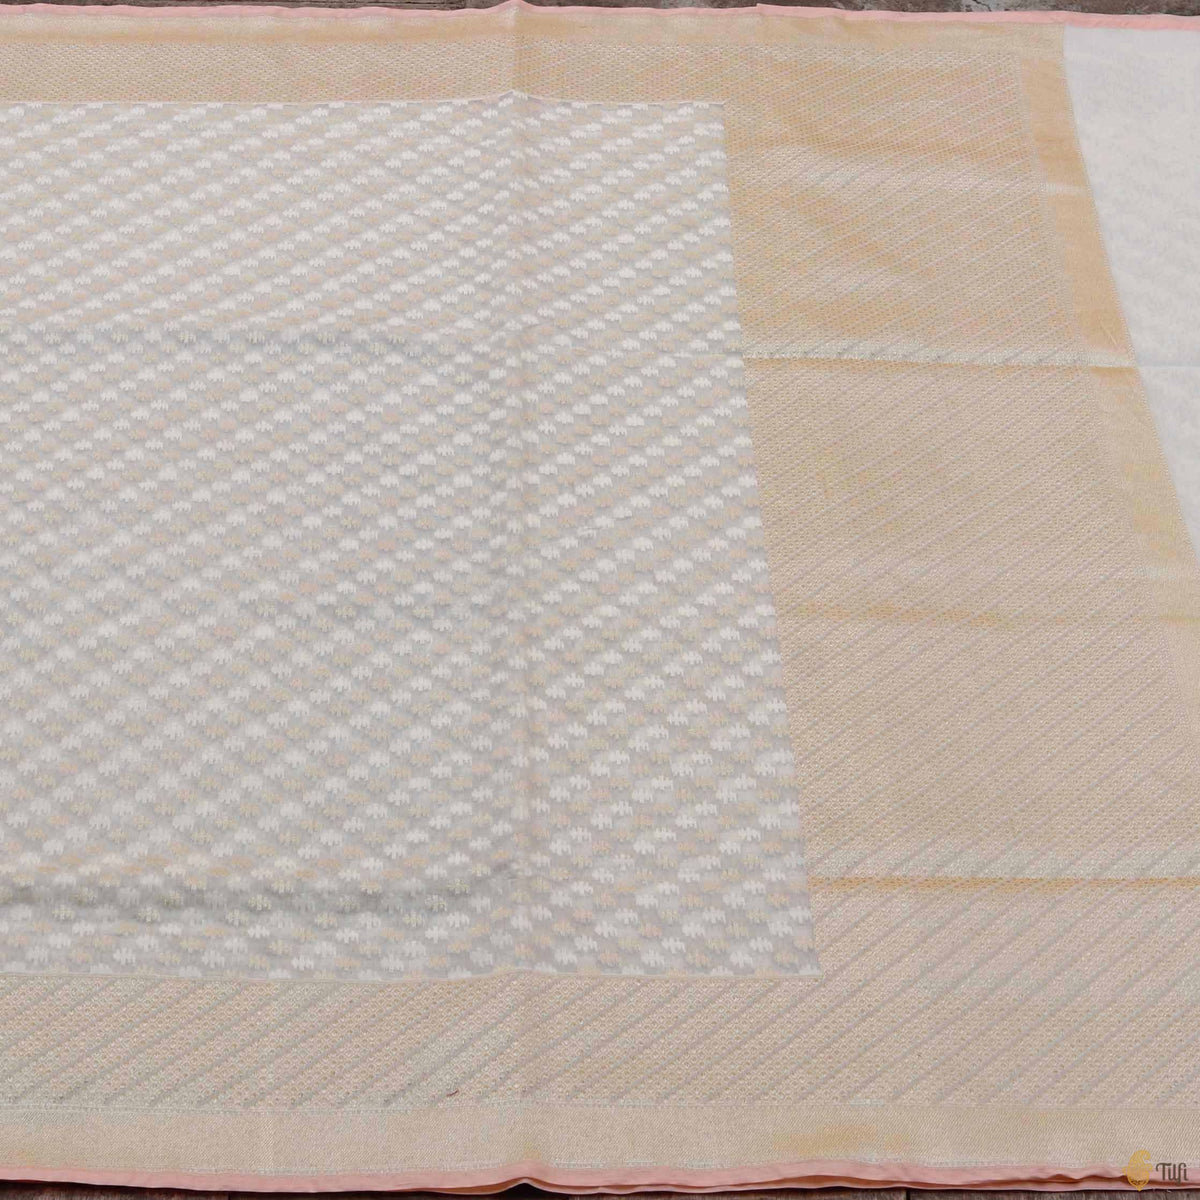 Off-White Pure Kora Silk by Cotton Banarasi Handloom Saree